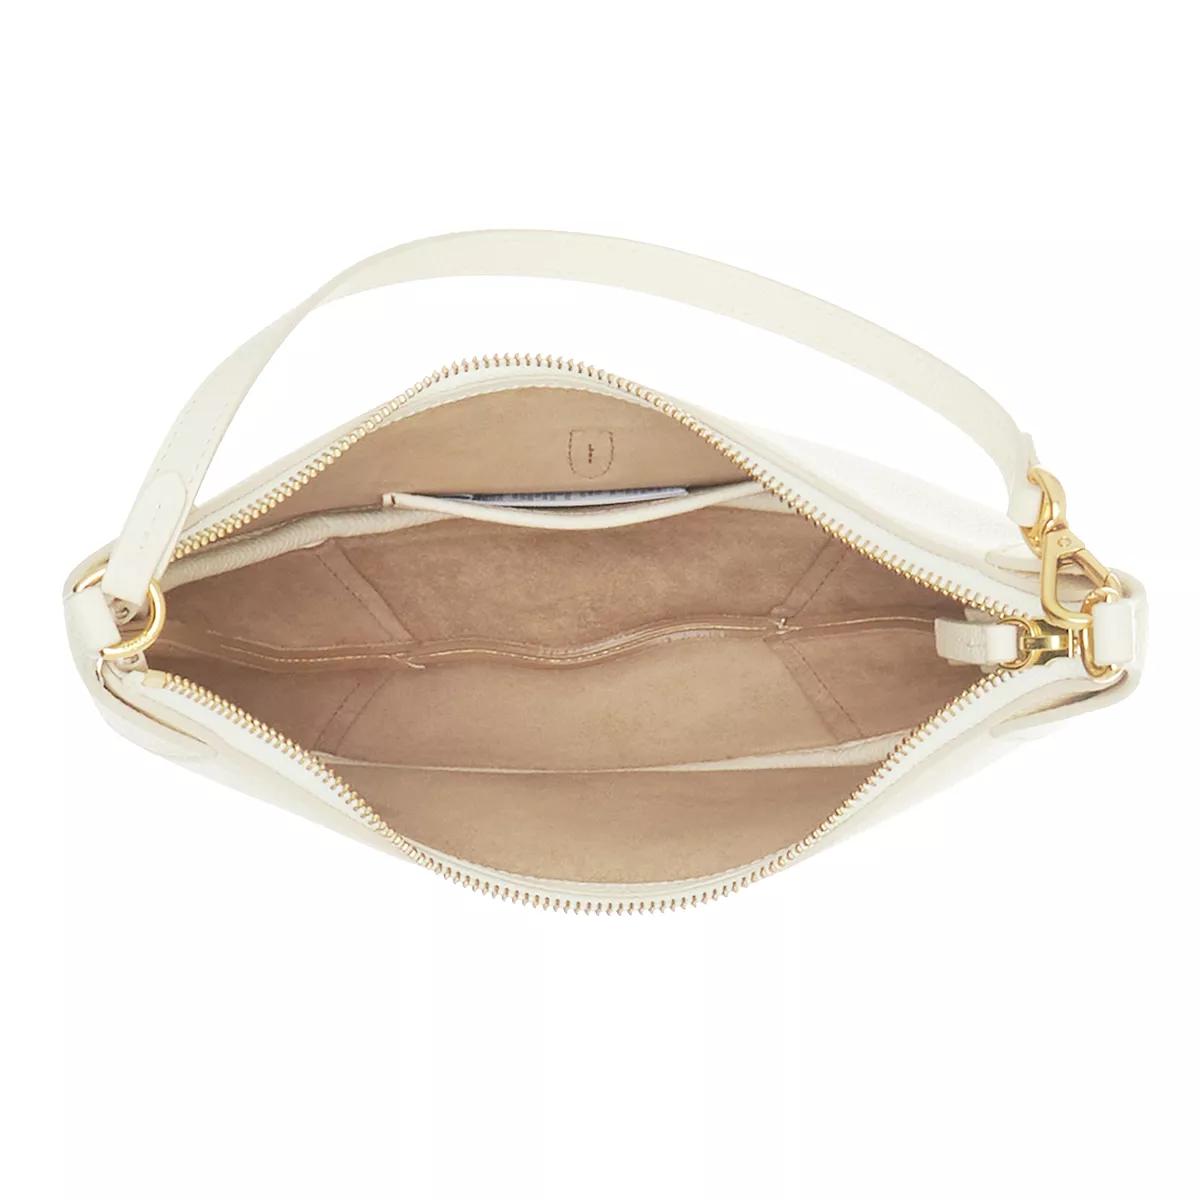 Polo Ralph Lauren Hobo bags Shoulder Bag Small in crème